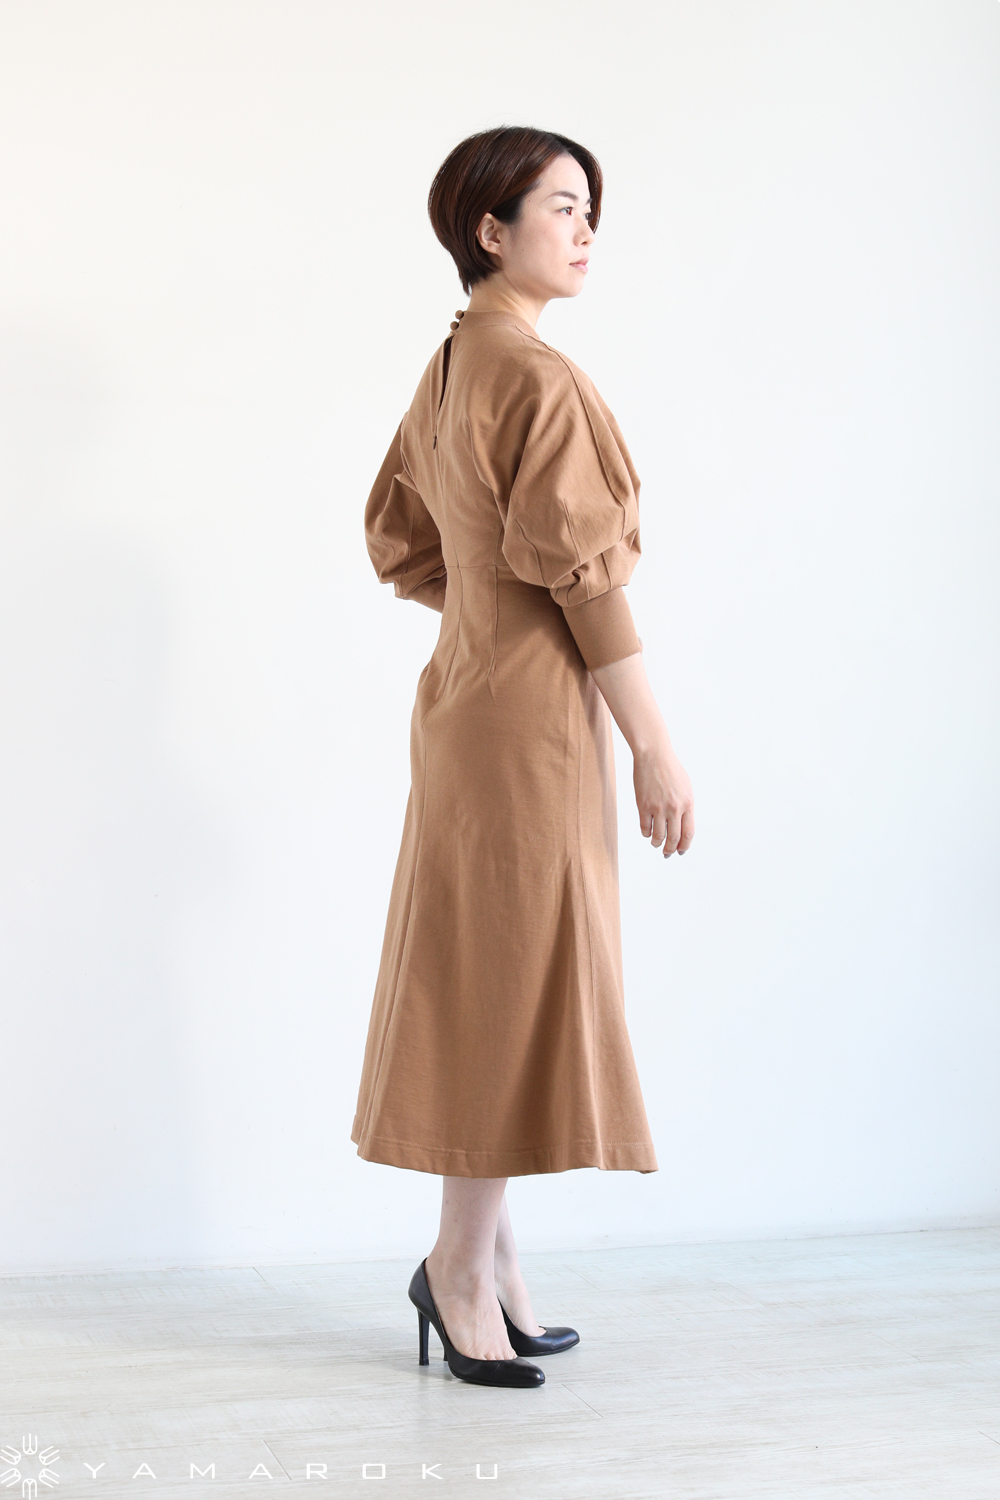 Mame Kurogouchi(マメ) Classic Cotton Dress！！ | YAMAROKU New Arrival